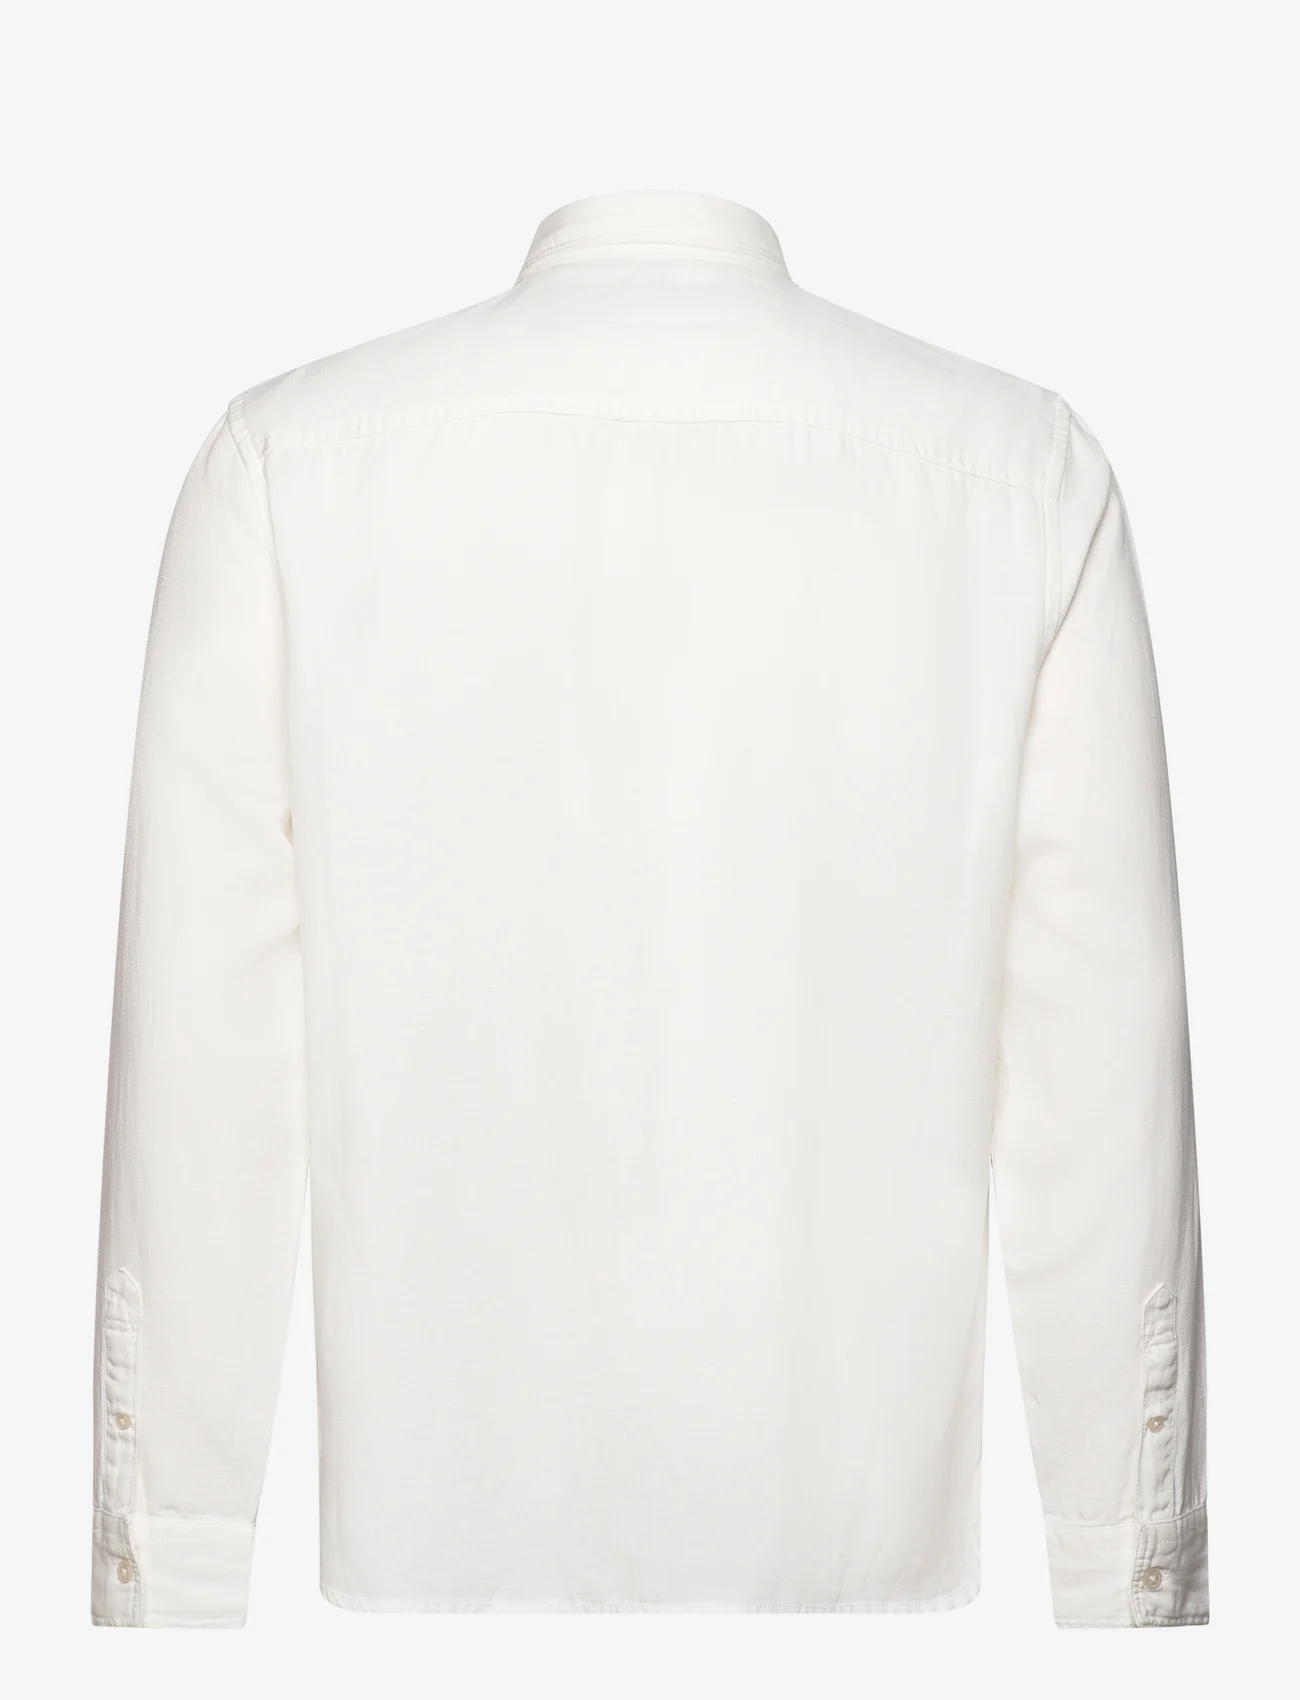 AllSaints - LAGUNA LS SHIRT - casual hemden - optic white - 1